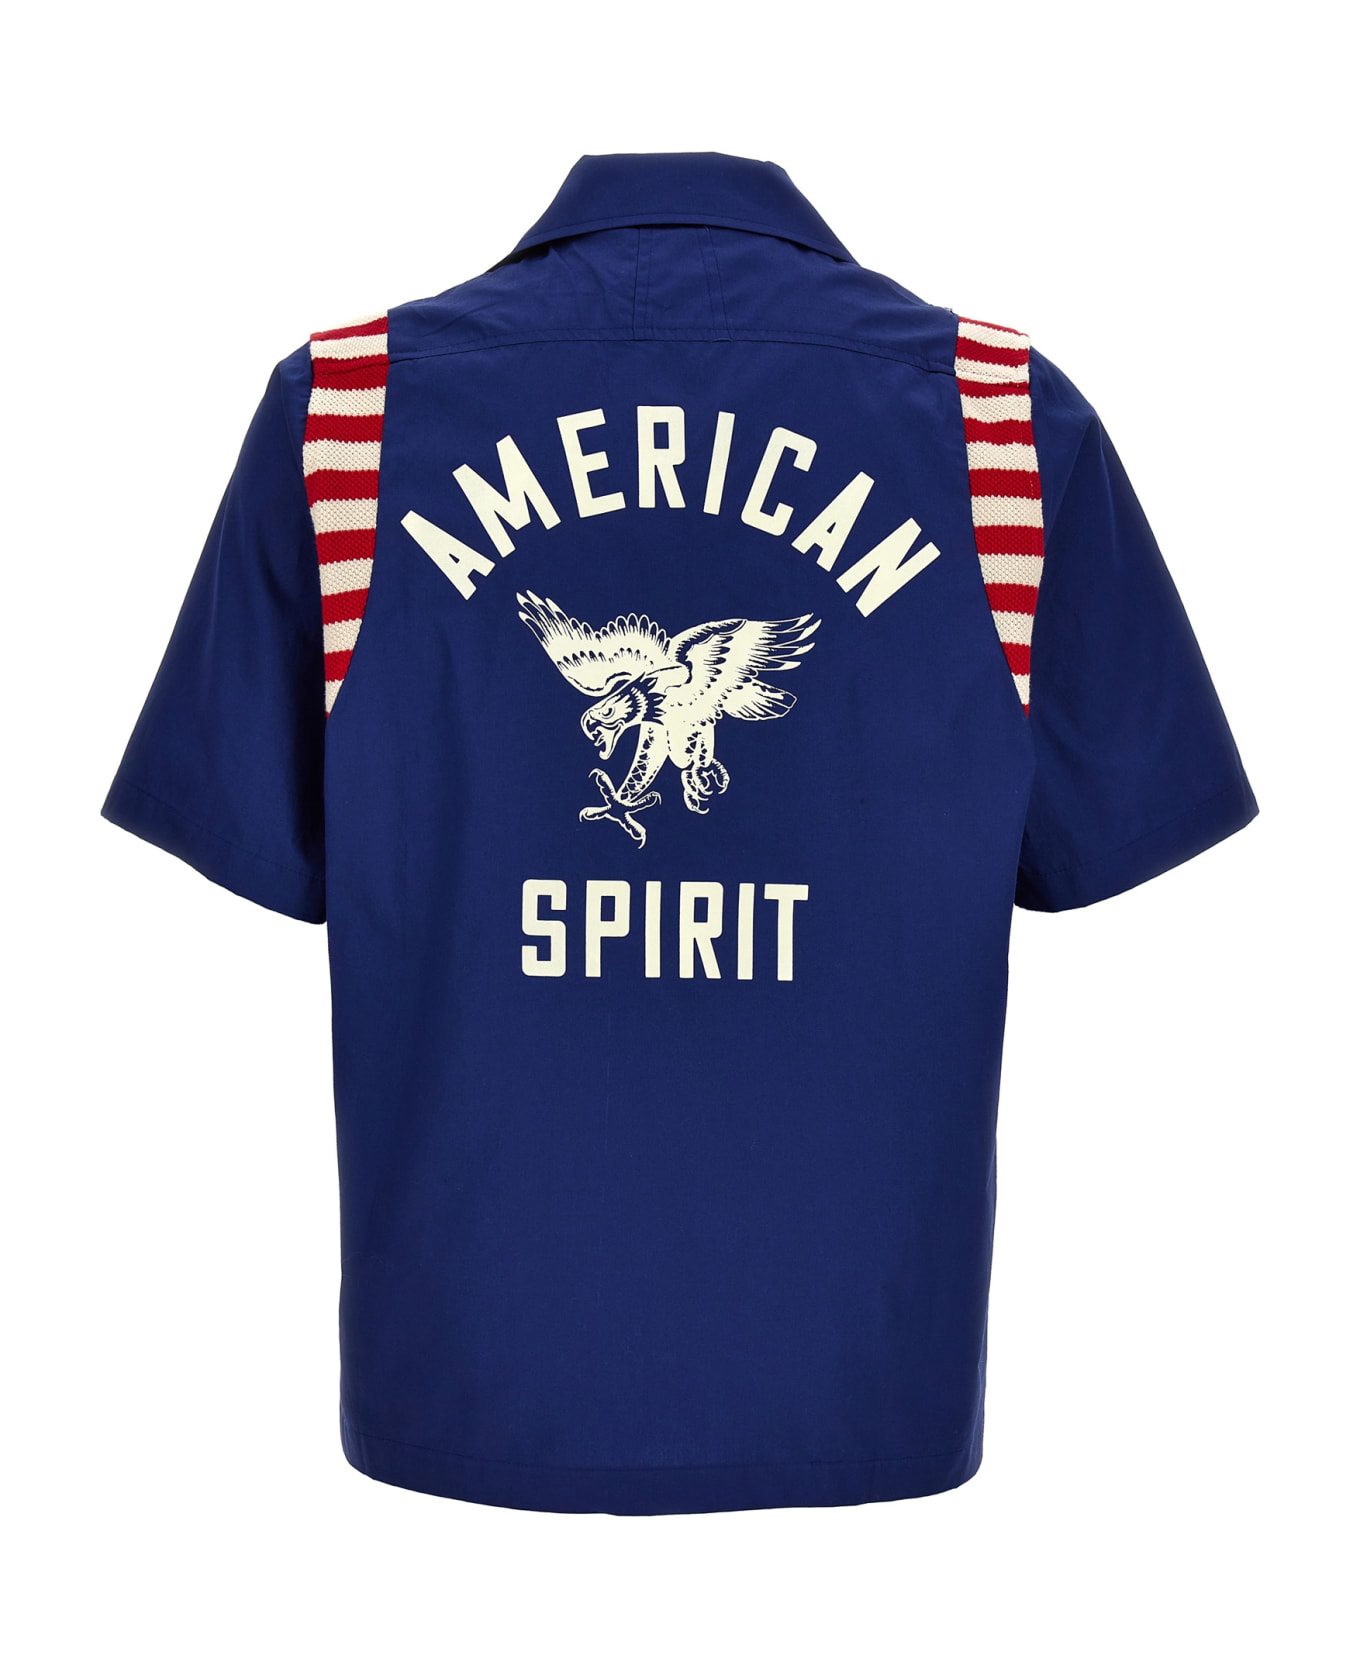 Rhude 'american Spirit' Shirt - Blue シャツ